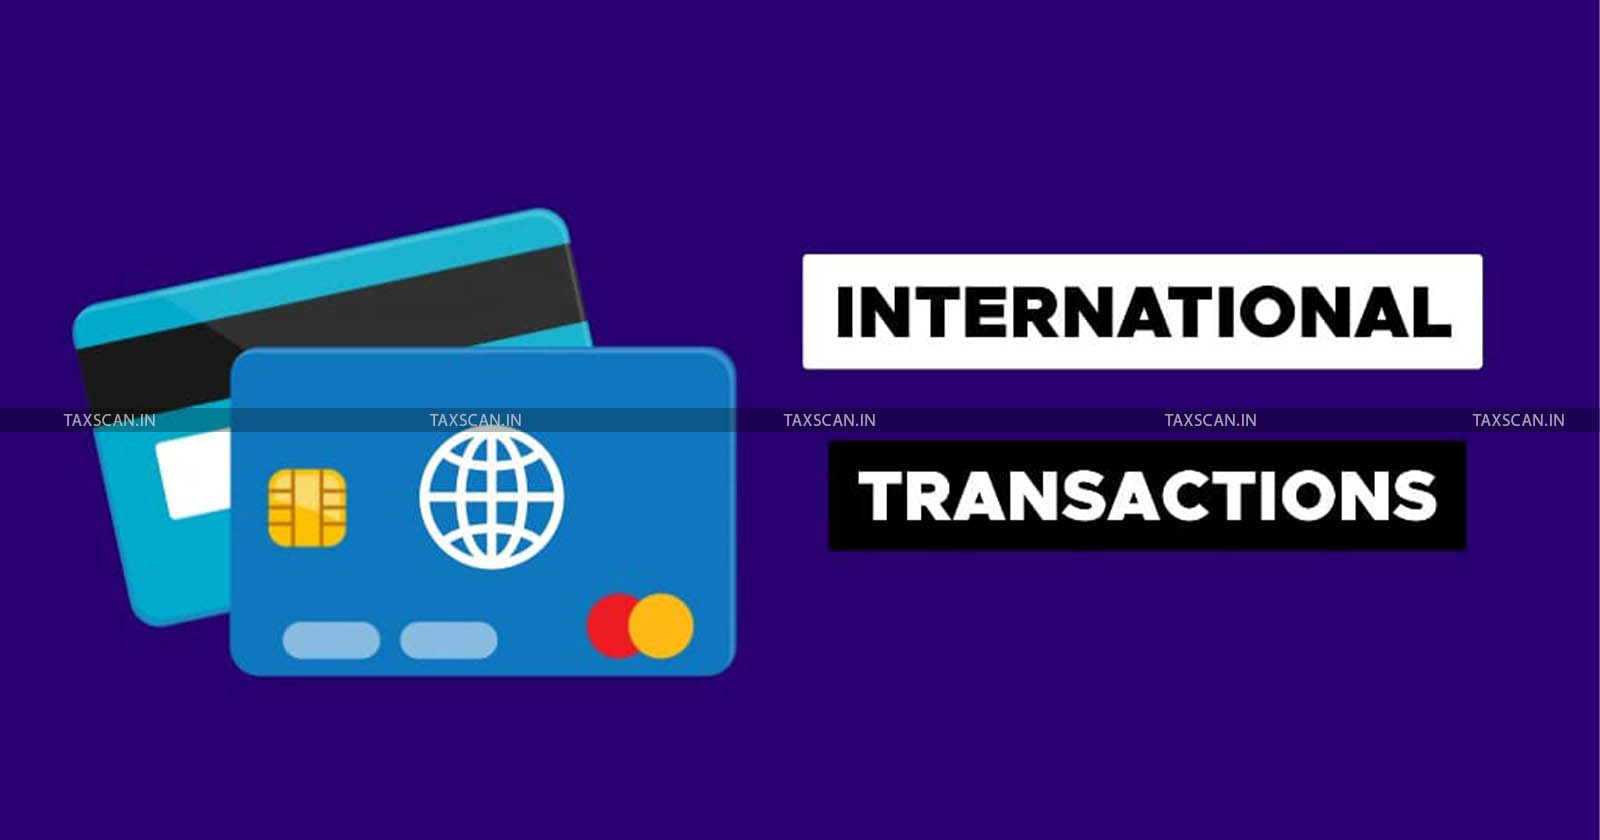 ITAT - ALP - international transactions - ICICI Bank - TAXSCAN